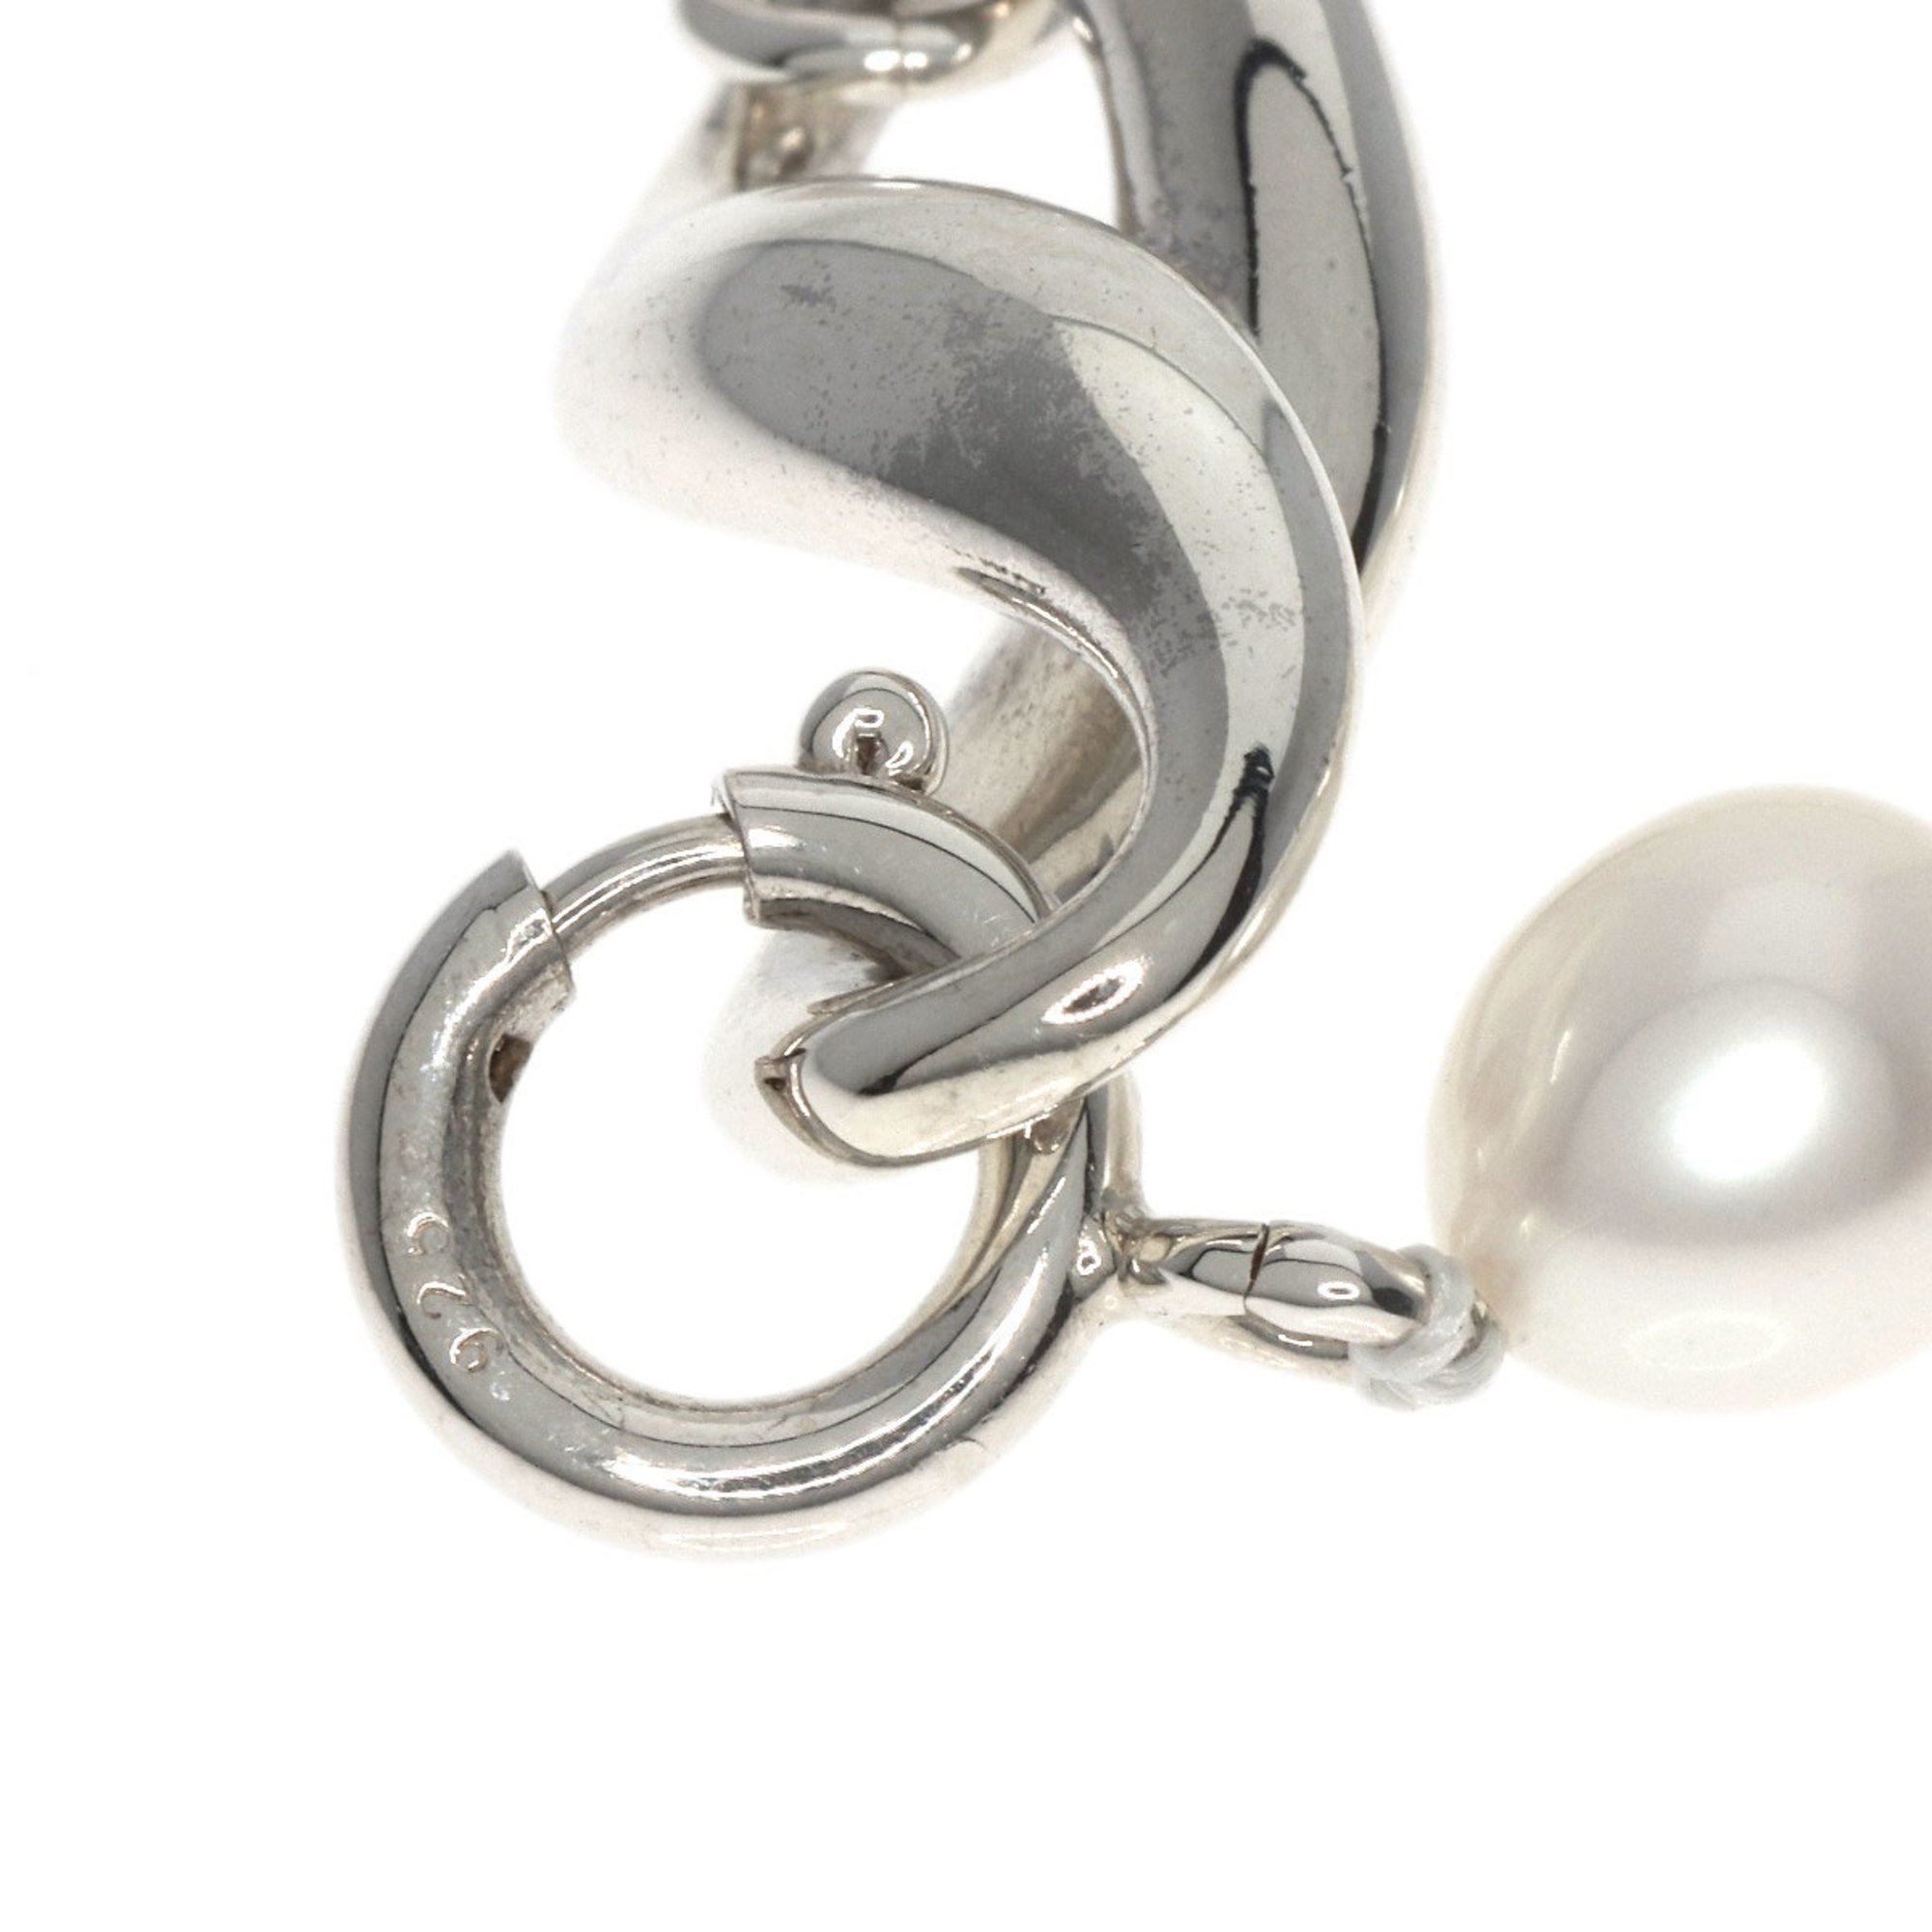 Tiffany freshwater pearl infinity bracelet silver ladies